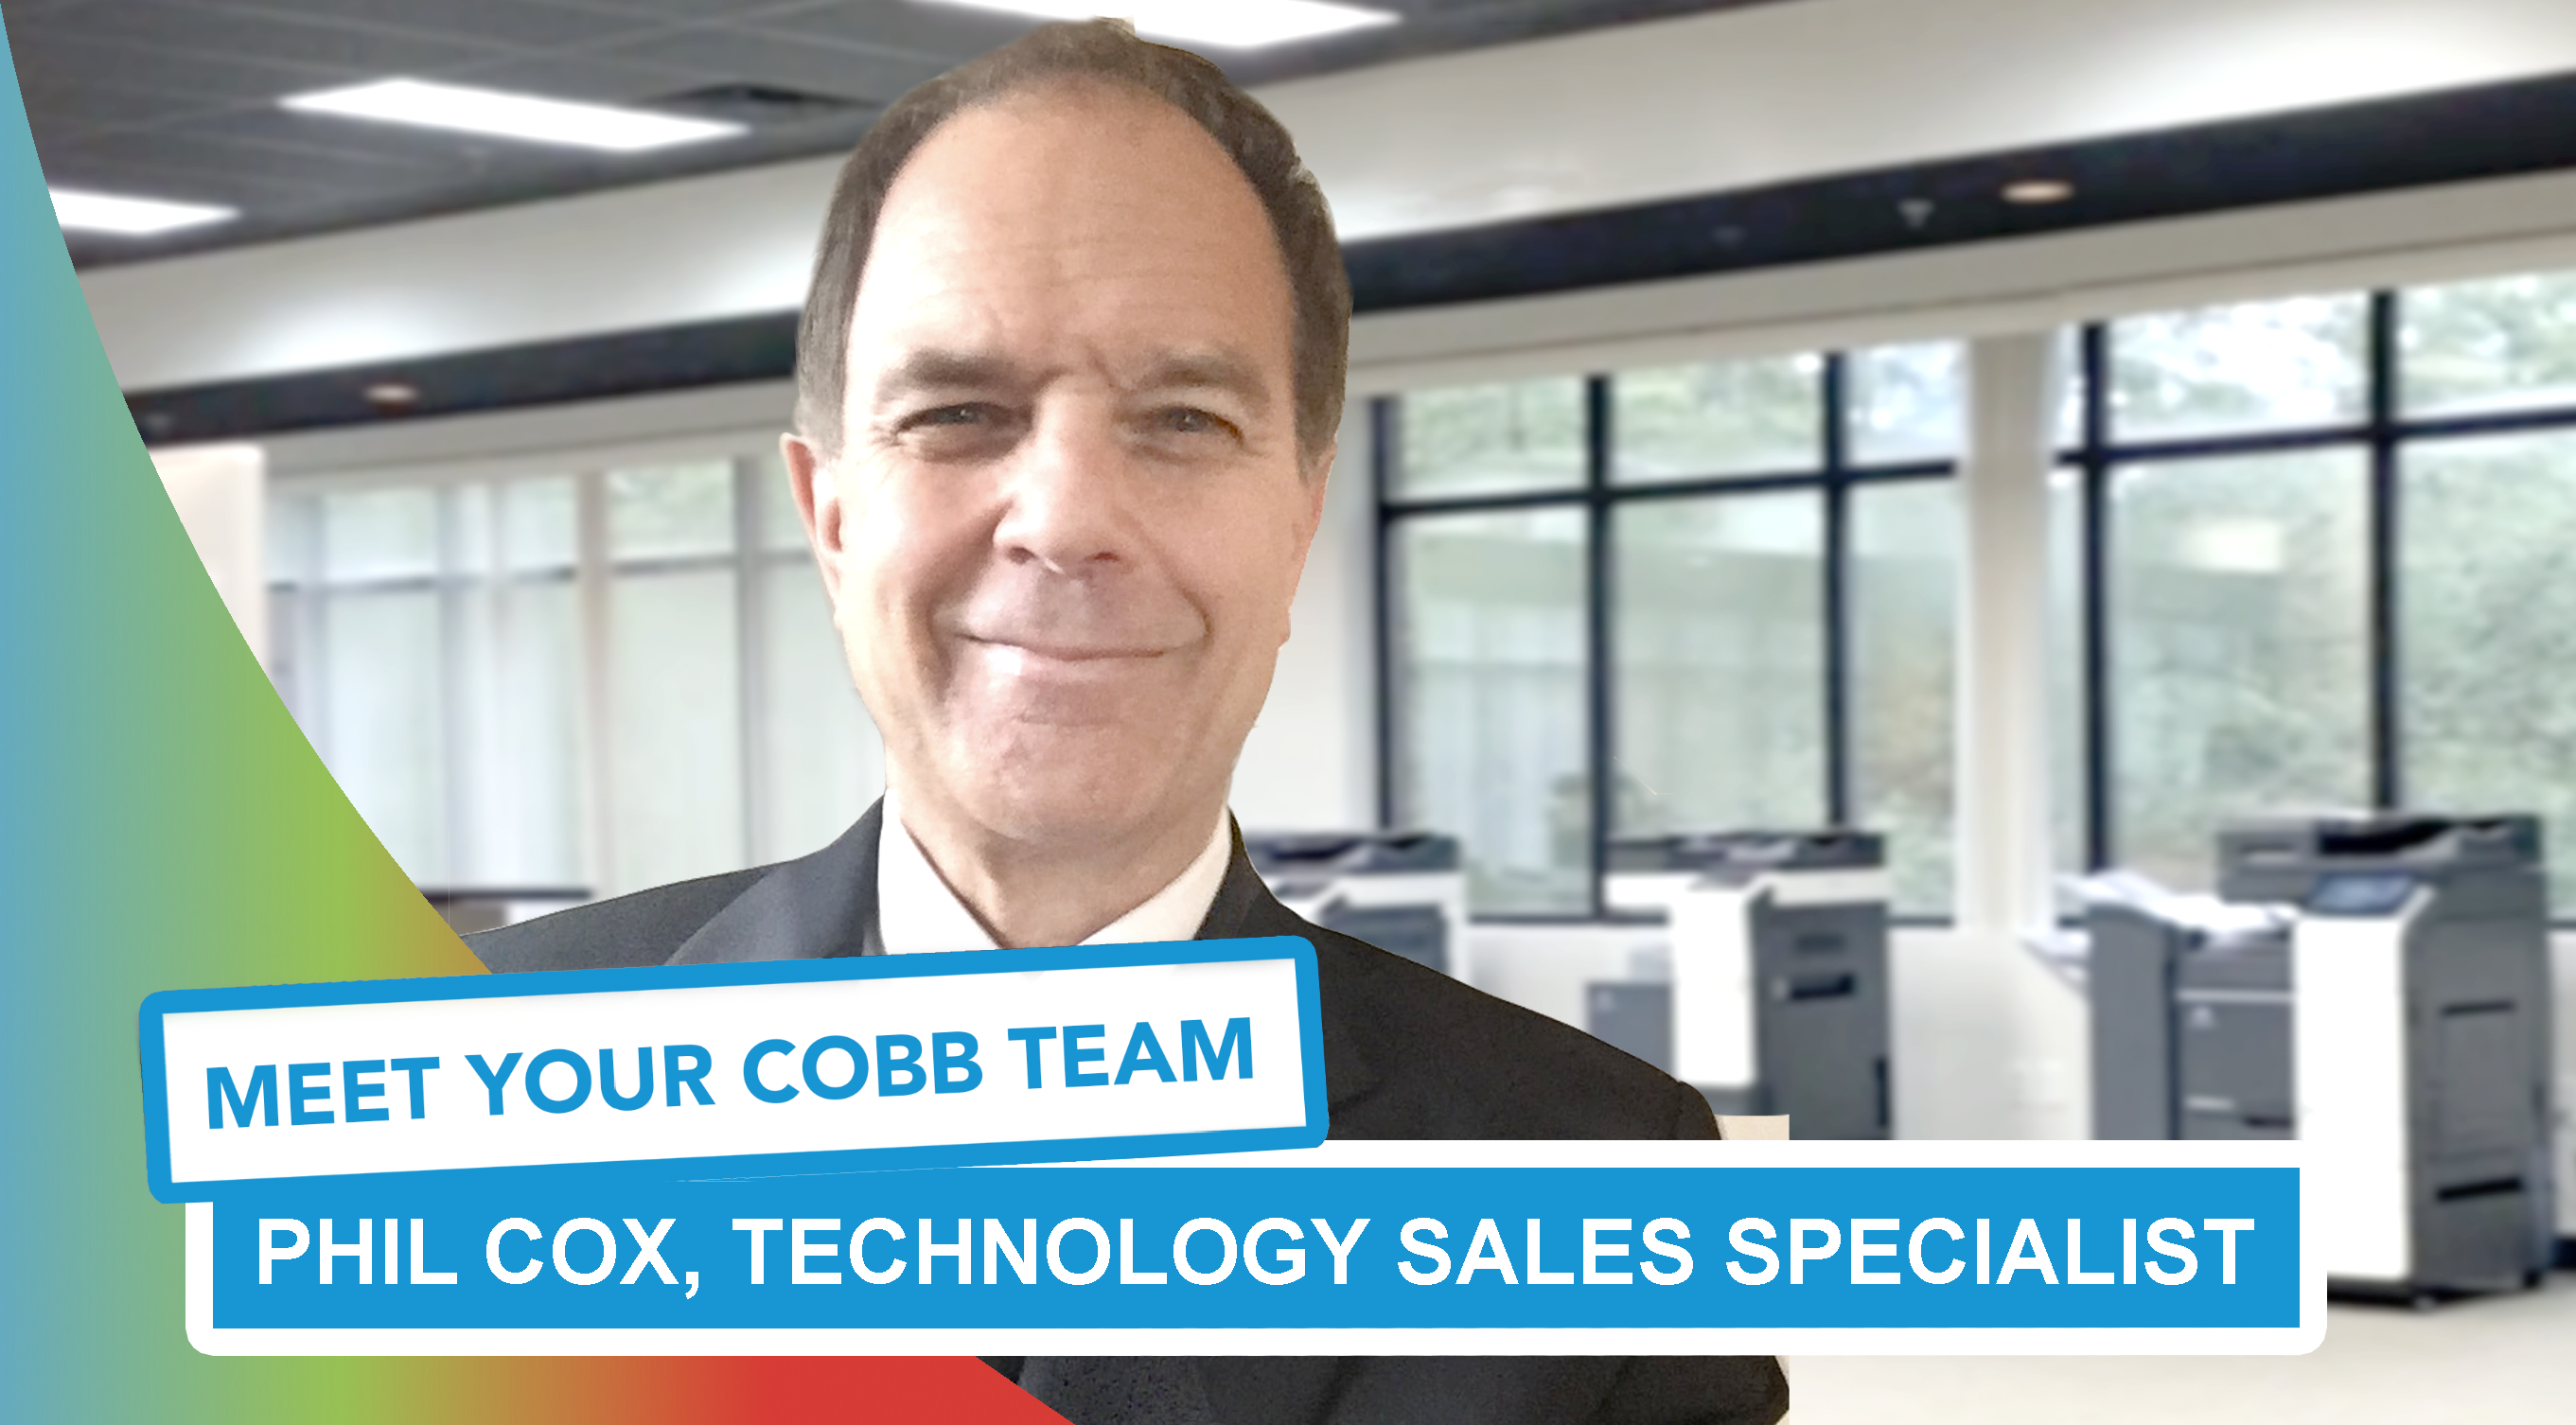 Meet Your Cobb Team: Phil Cox, Technology Sales Specialist